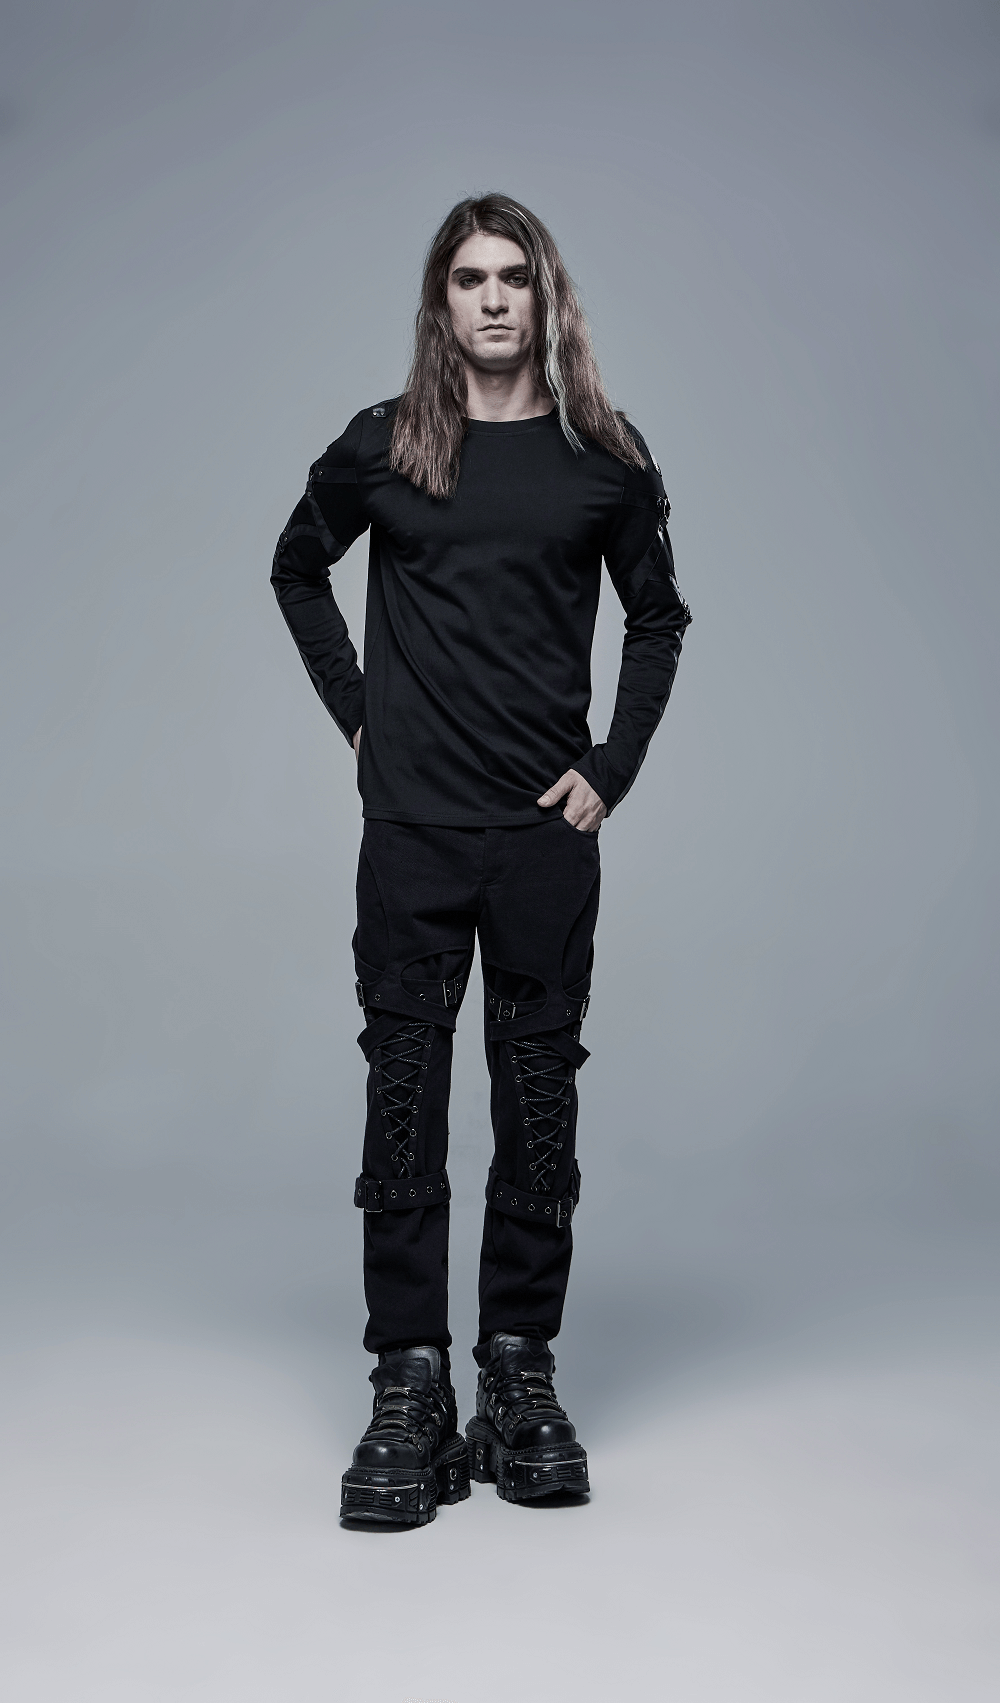 Black long-sleeved sweatshirt in a fancy gothic style